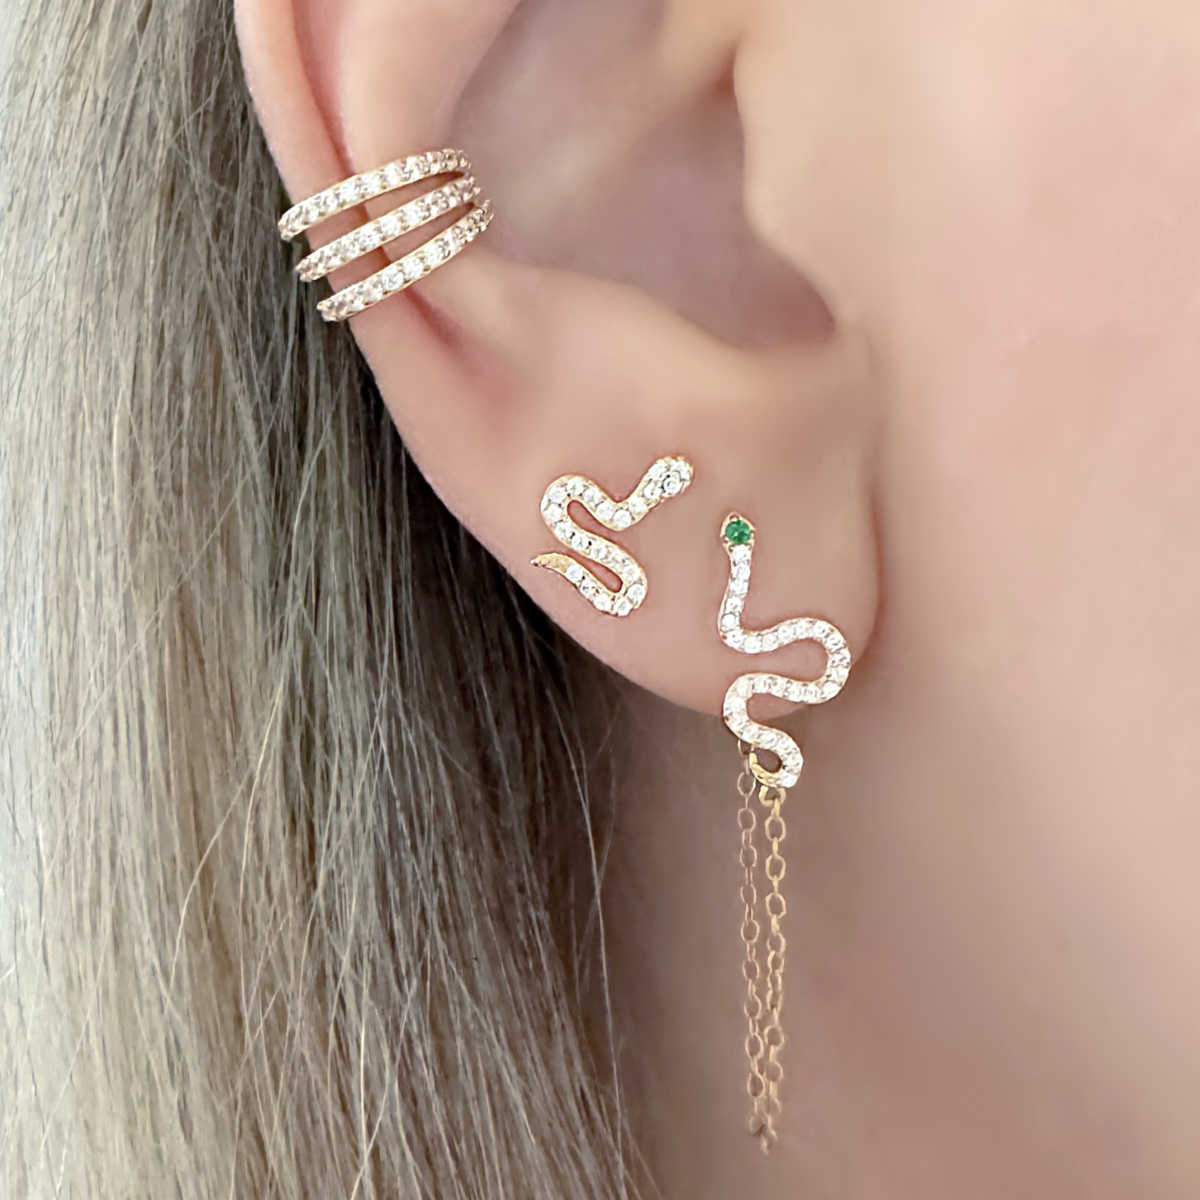 Snake Stud Earrings with Gemstones, 18k Gold & Sterling Silver, on Model